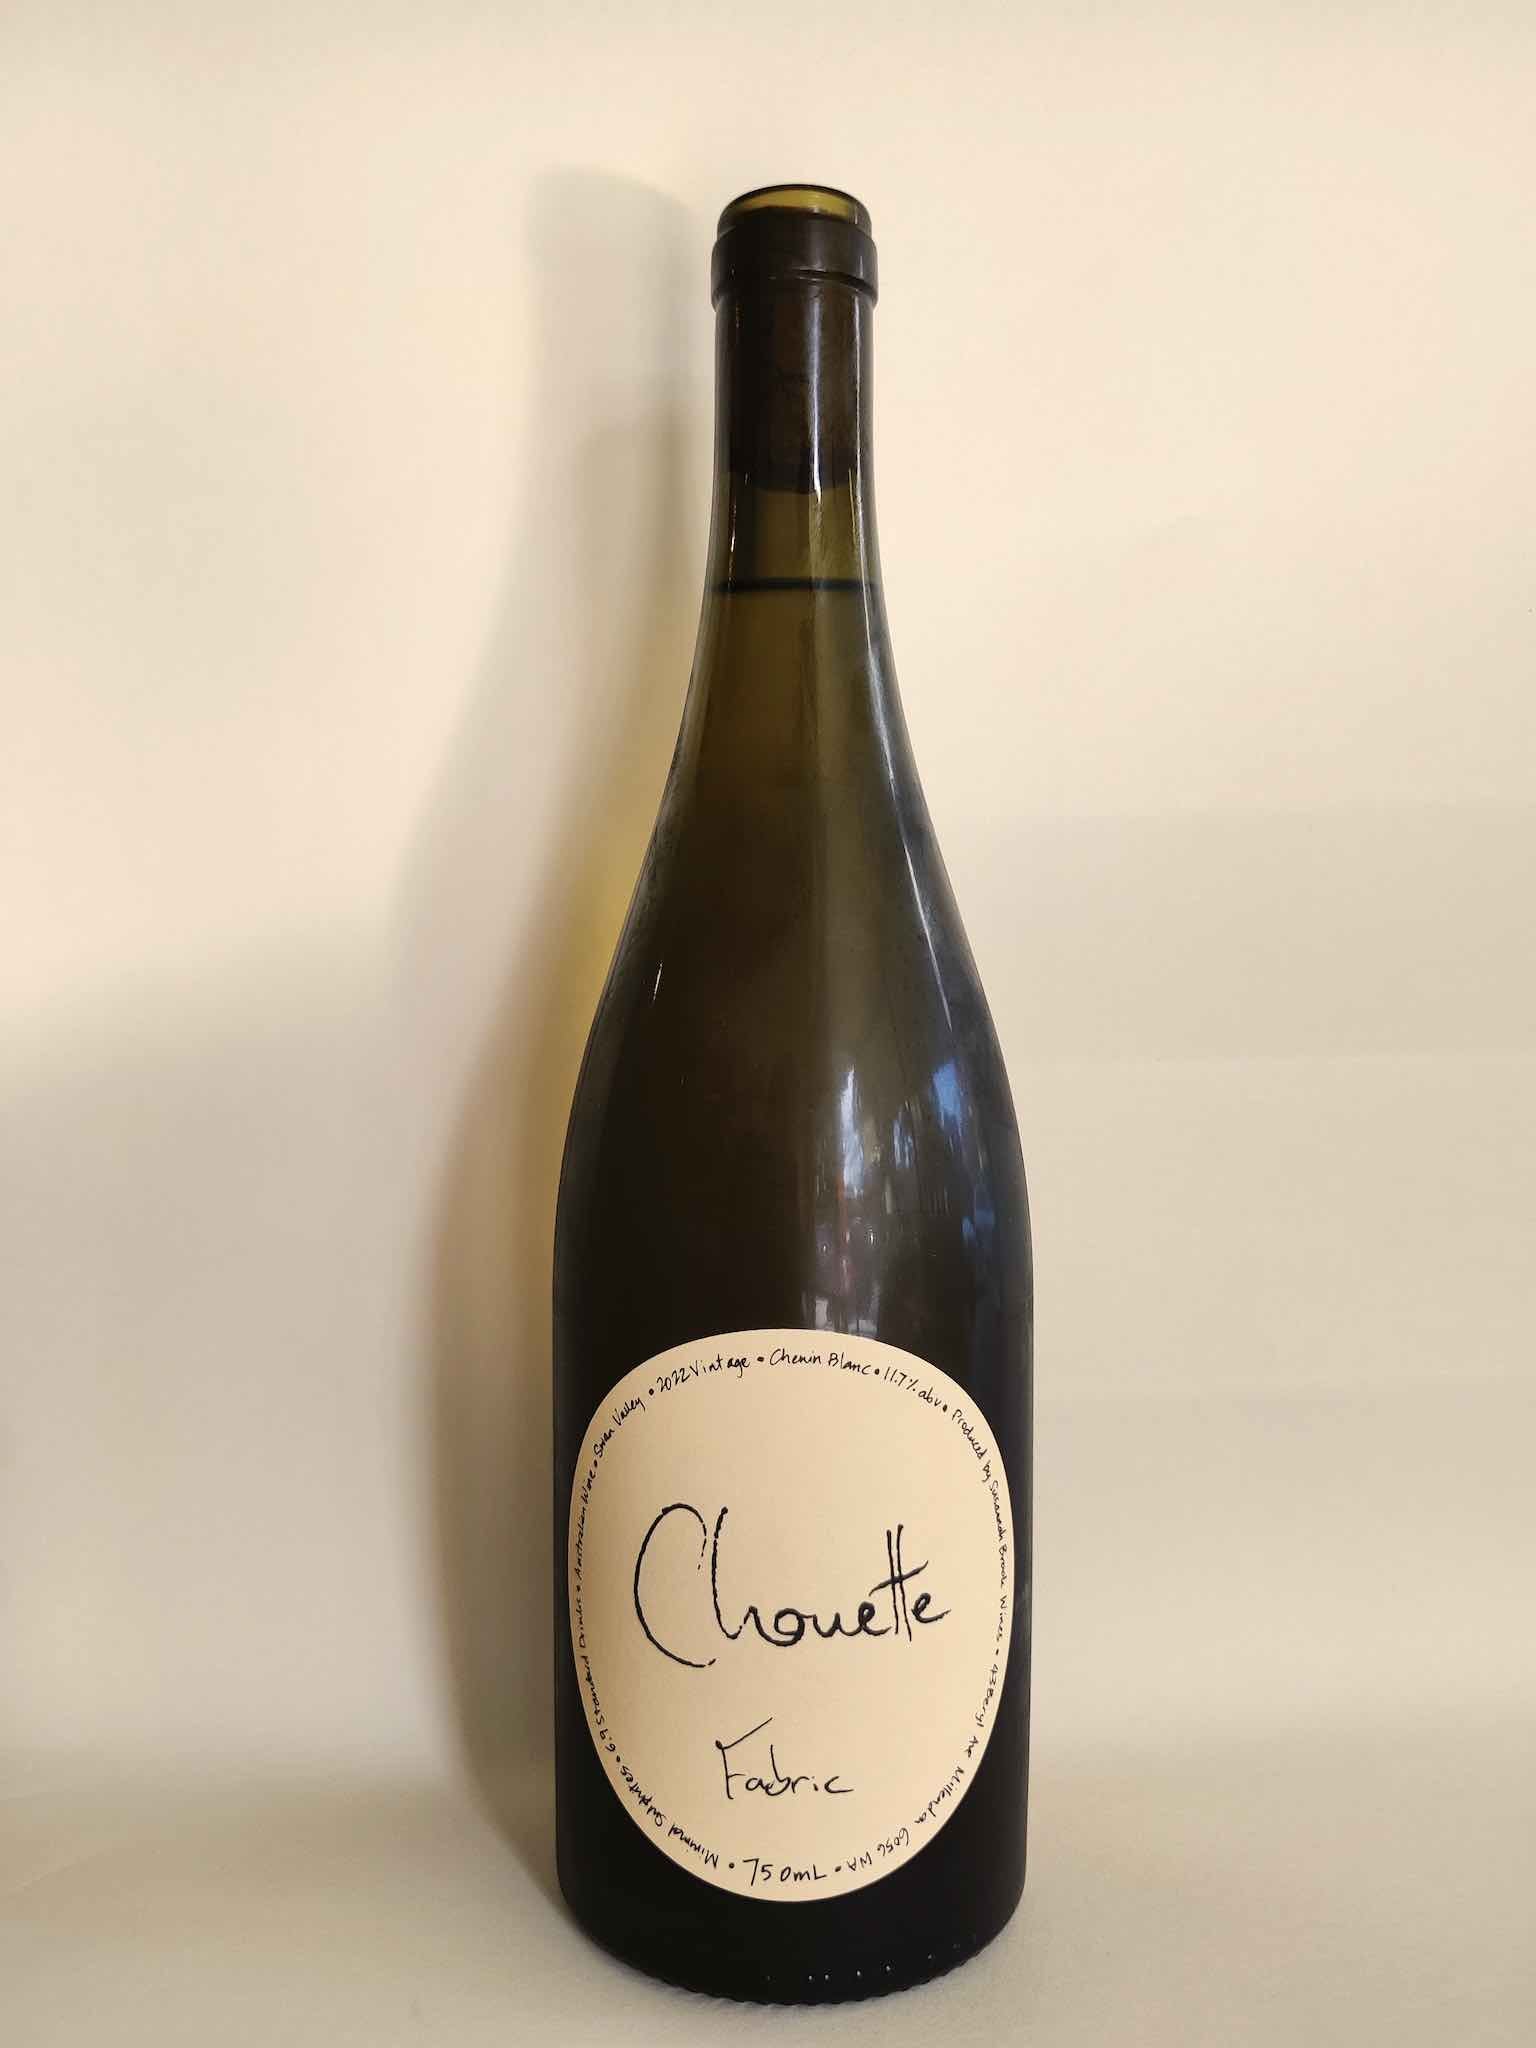 A bottle of Chouette Chenin Blanc white wine from Swan Valley, Western Australia. 